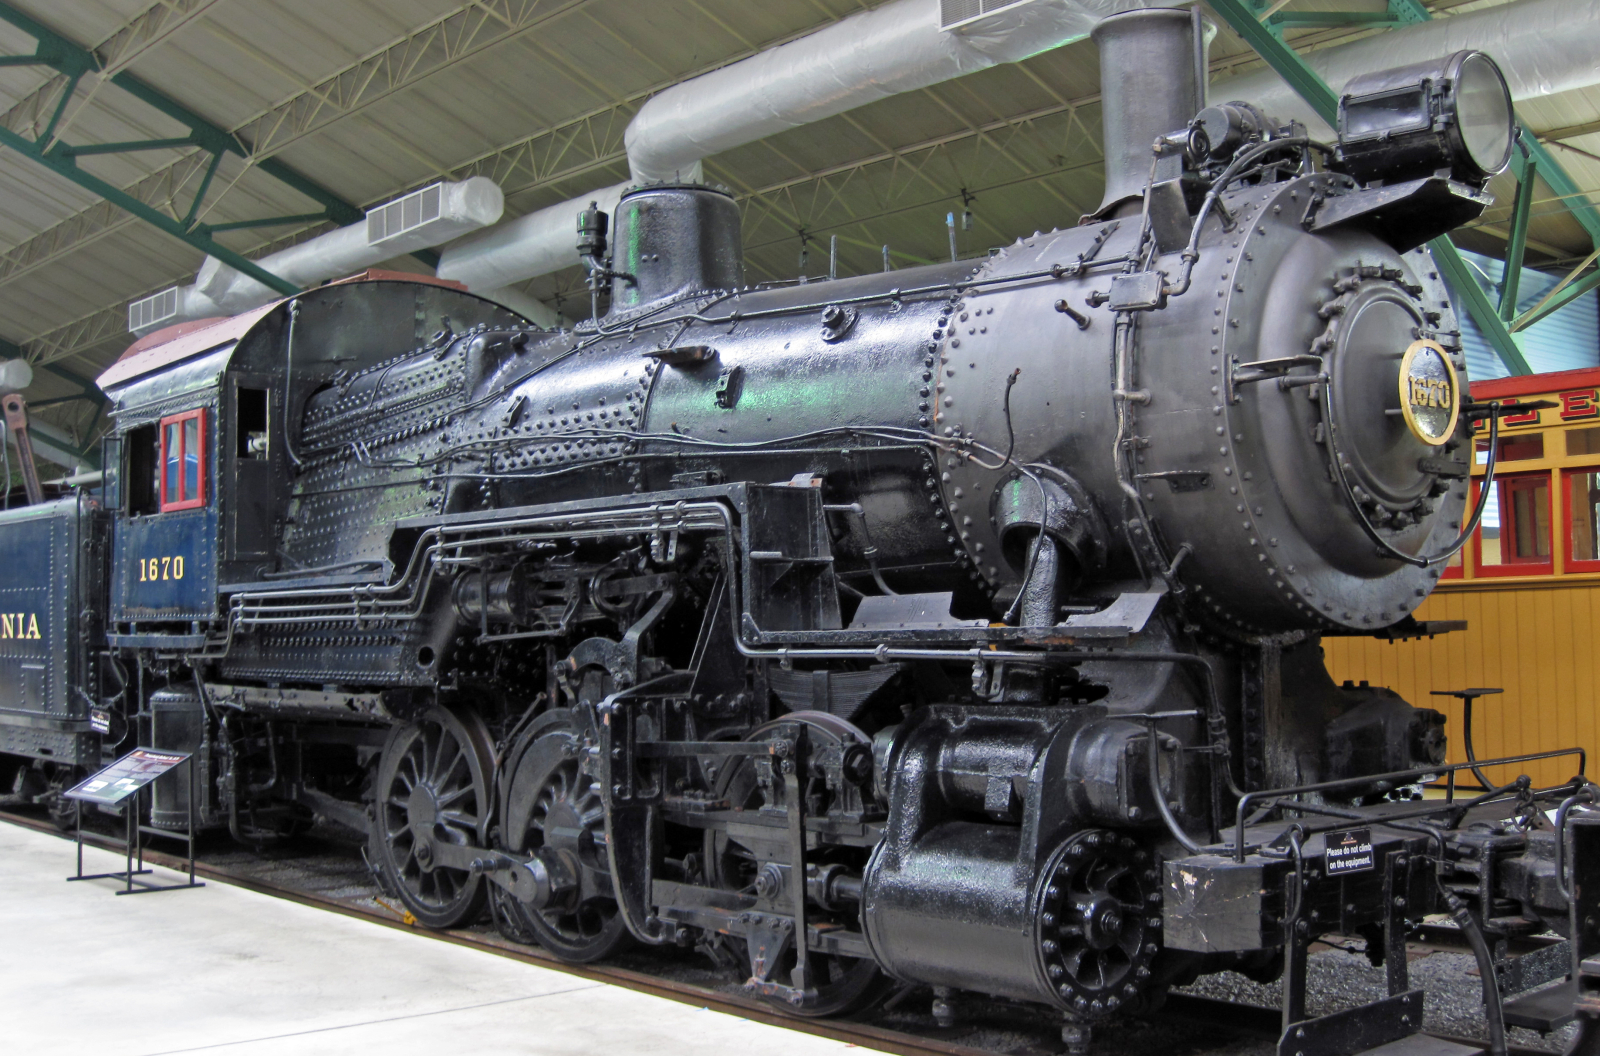 B6sb No. 1670 at the Railroad Museum of Pennsylvania, Strasburg